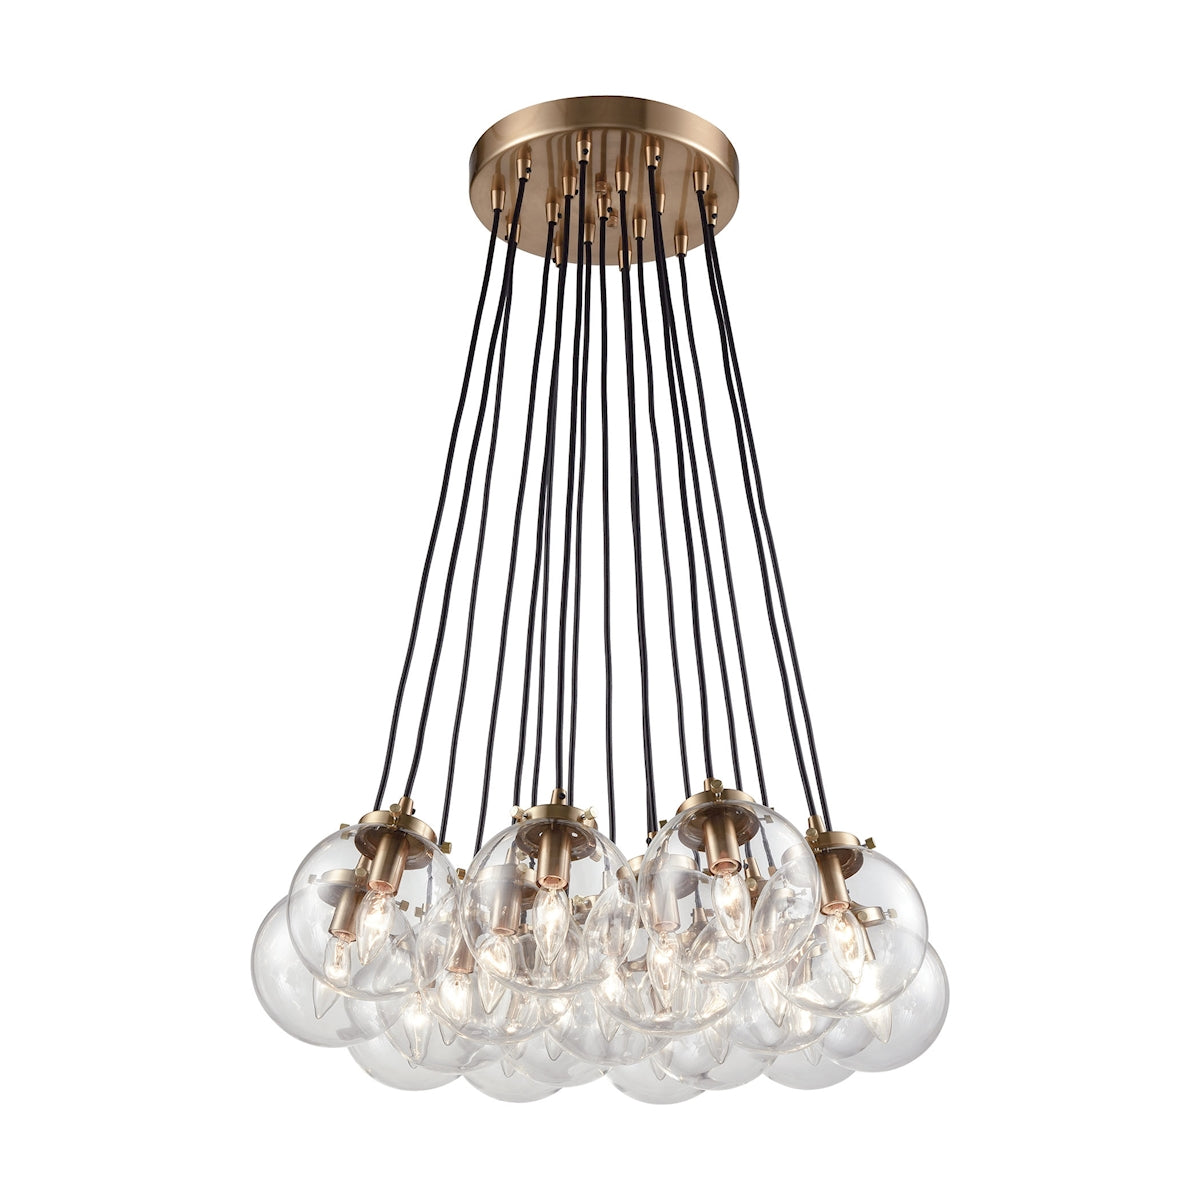 ELK Lighting 14466/17 Boudreaux 17-Light Chandelier in Satin Brass with Sphere-shaped Glass